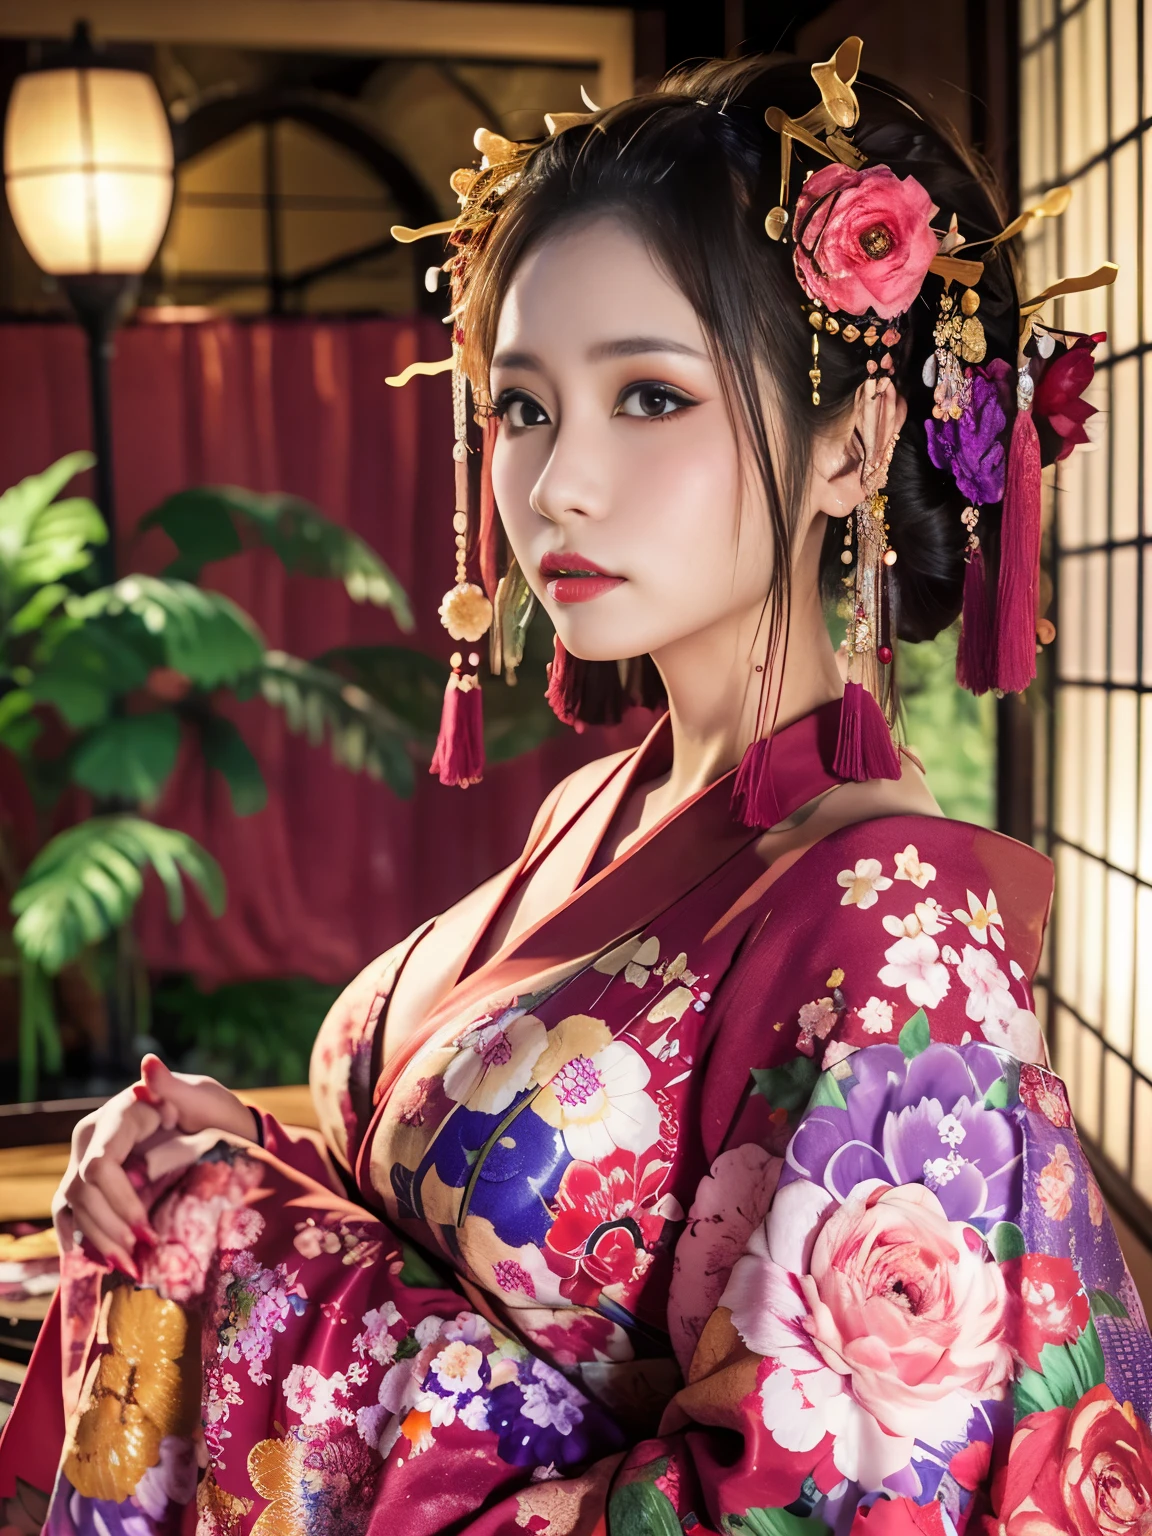 ((NSFW)),4K, 걸작, 높은 해상도, 혼란스러운,자연스러운 체적 조명 및 최고의 그림자, 笑얼굴,deep i는 세상의 깊은 곳에 쓰여 있다,soft delicate beautiful attractive 얼굴, 아름다운 가장자리 매춘부_여성, a 여성 in a kimono posing for a picture  ,완벽한 가장자리를 가진 창녀_얼굴,완벽한 가장자리를 가진 창녀_몸,에지오이란_보상하다,에지오이란_헤어스타일